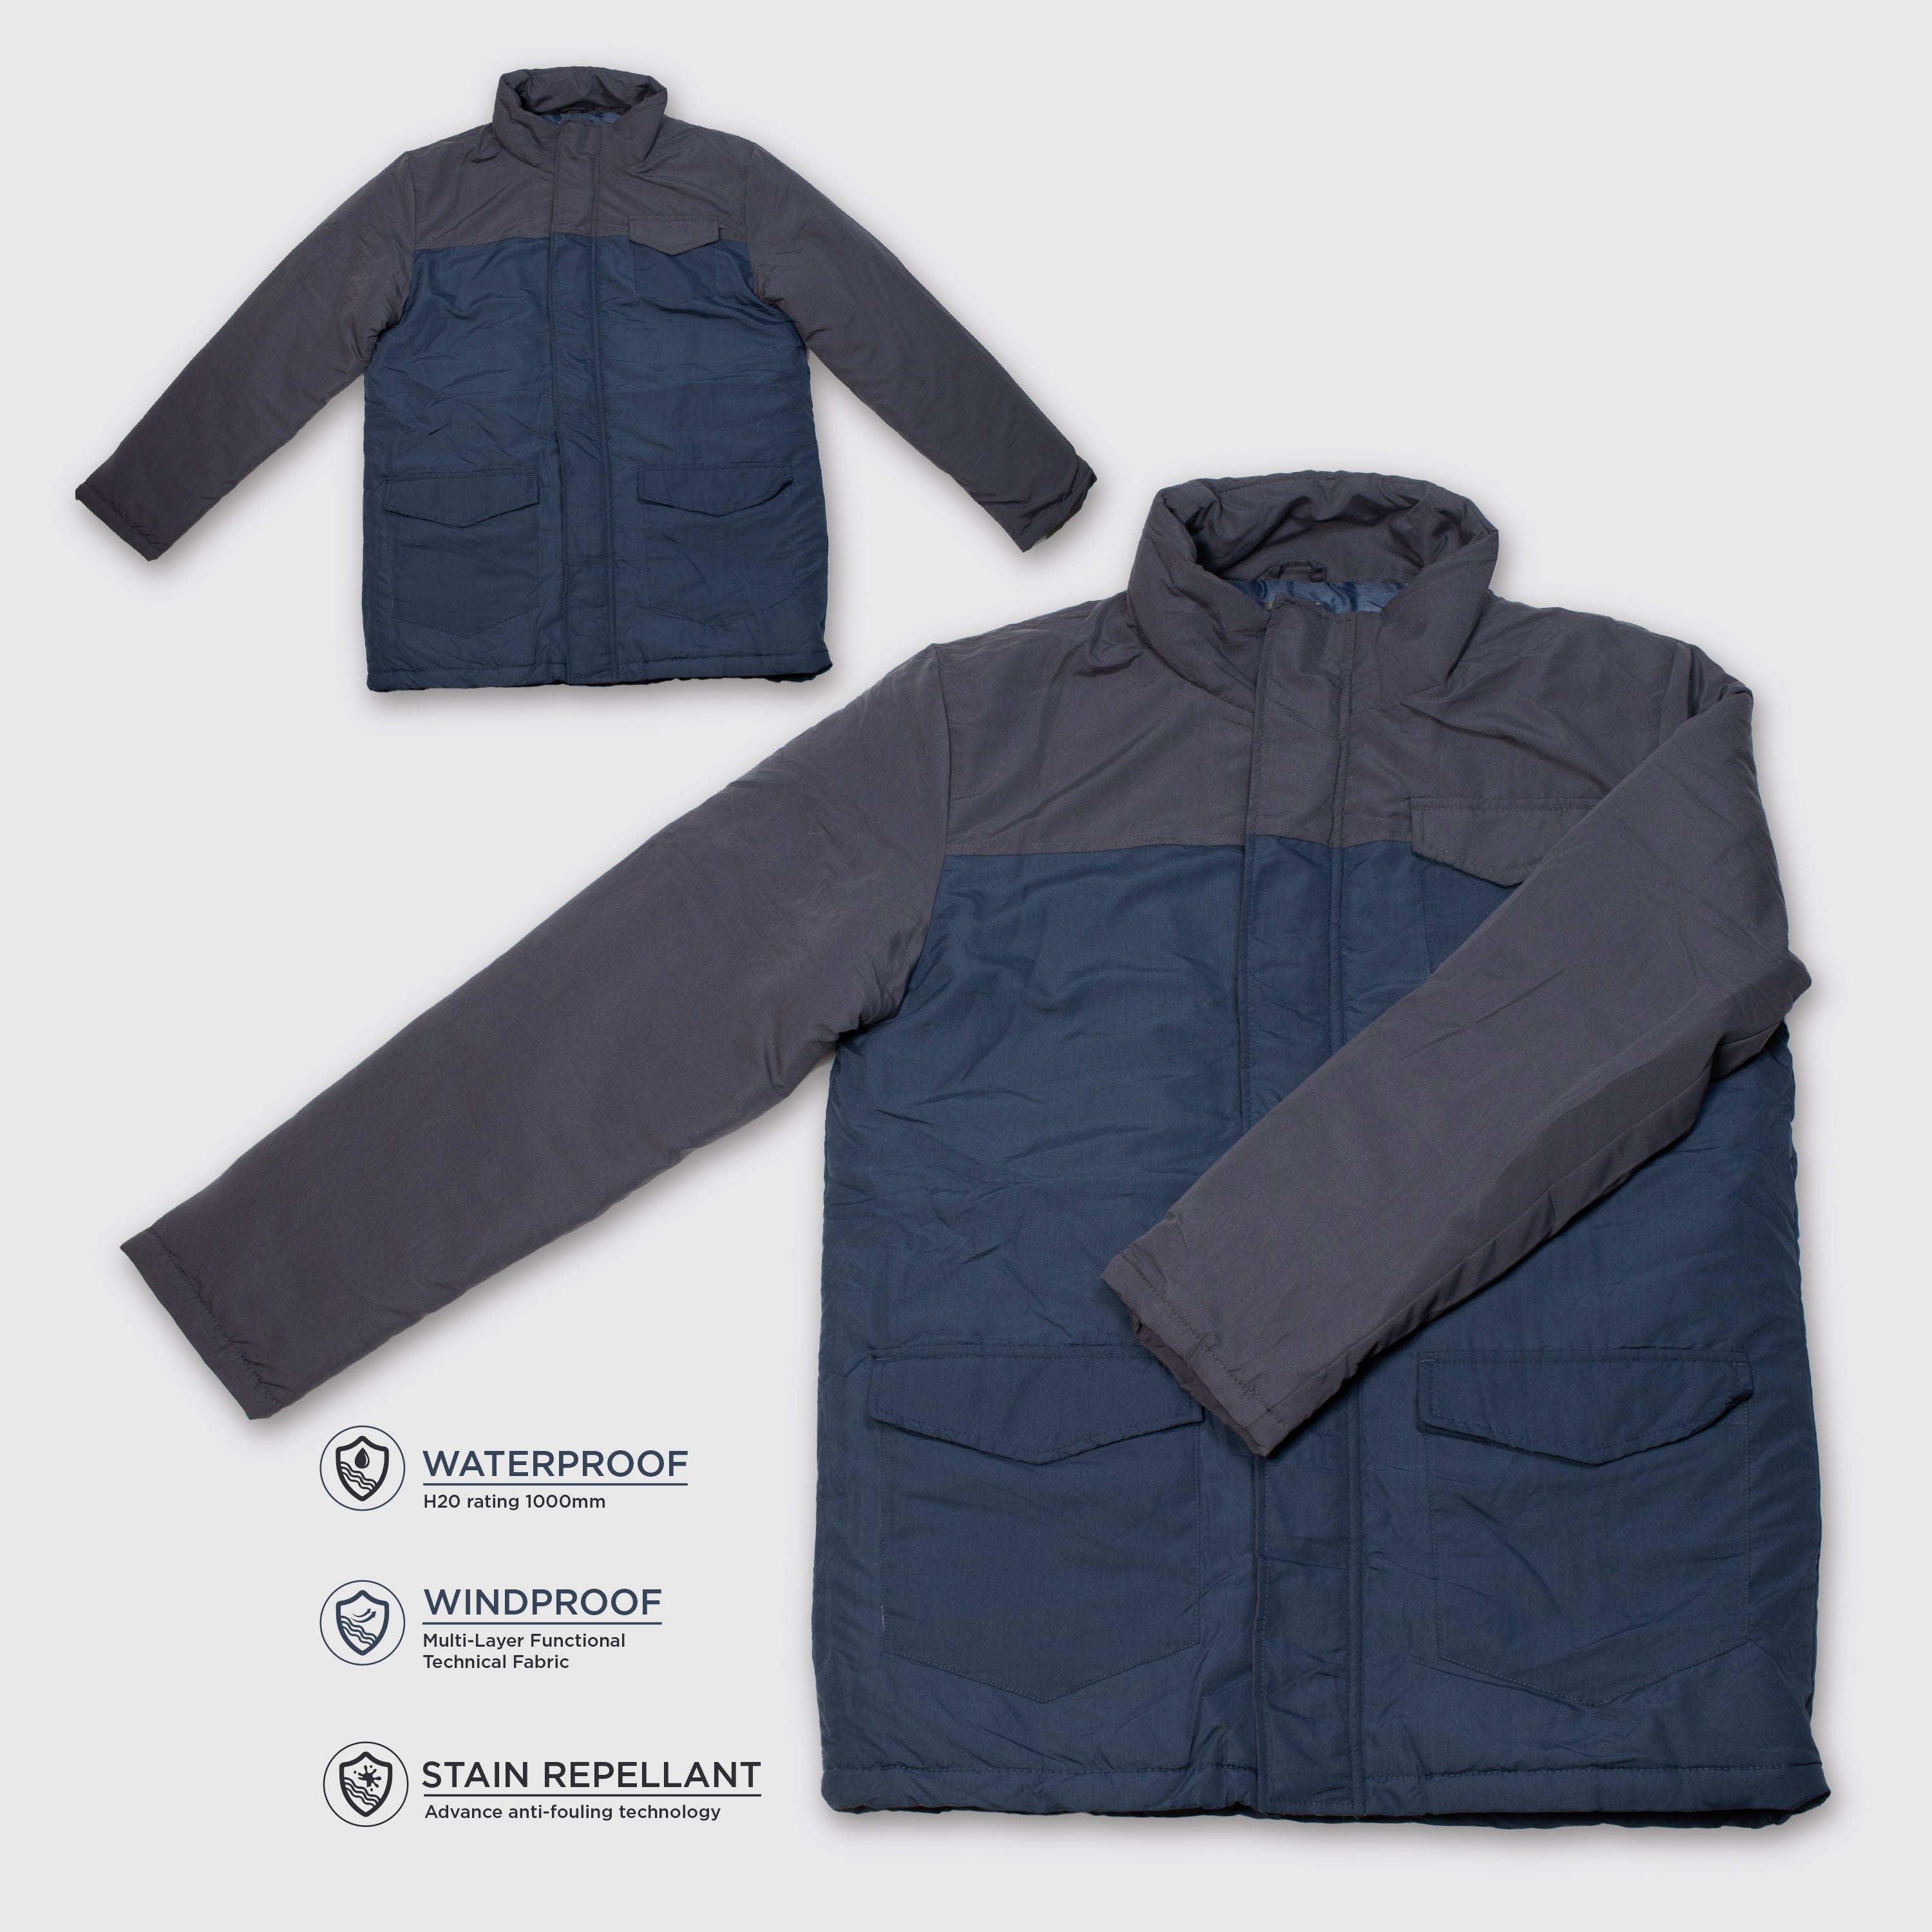 Men's Winter Coats in Assorted Sizes - Bulk Case of 24 Jackets